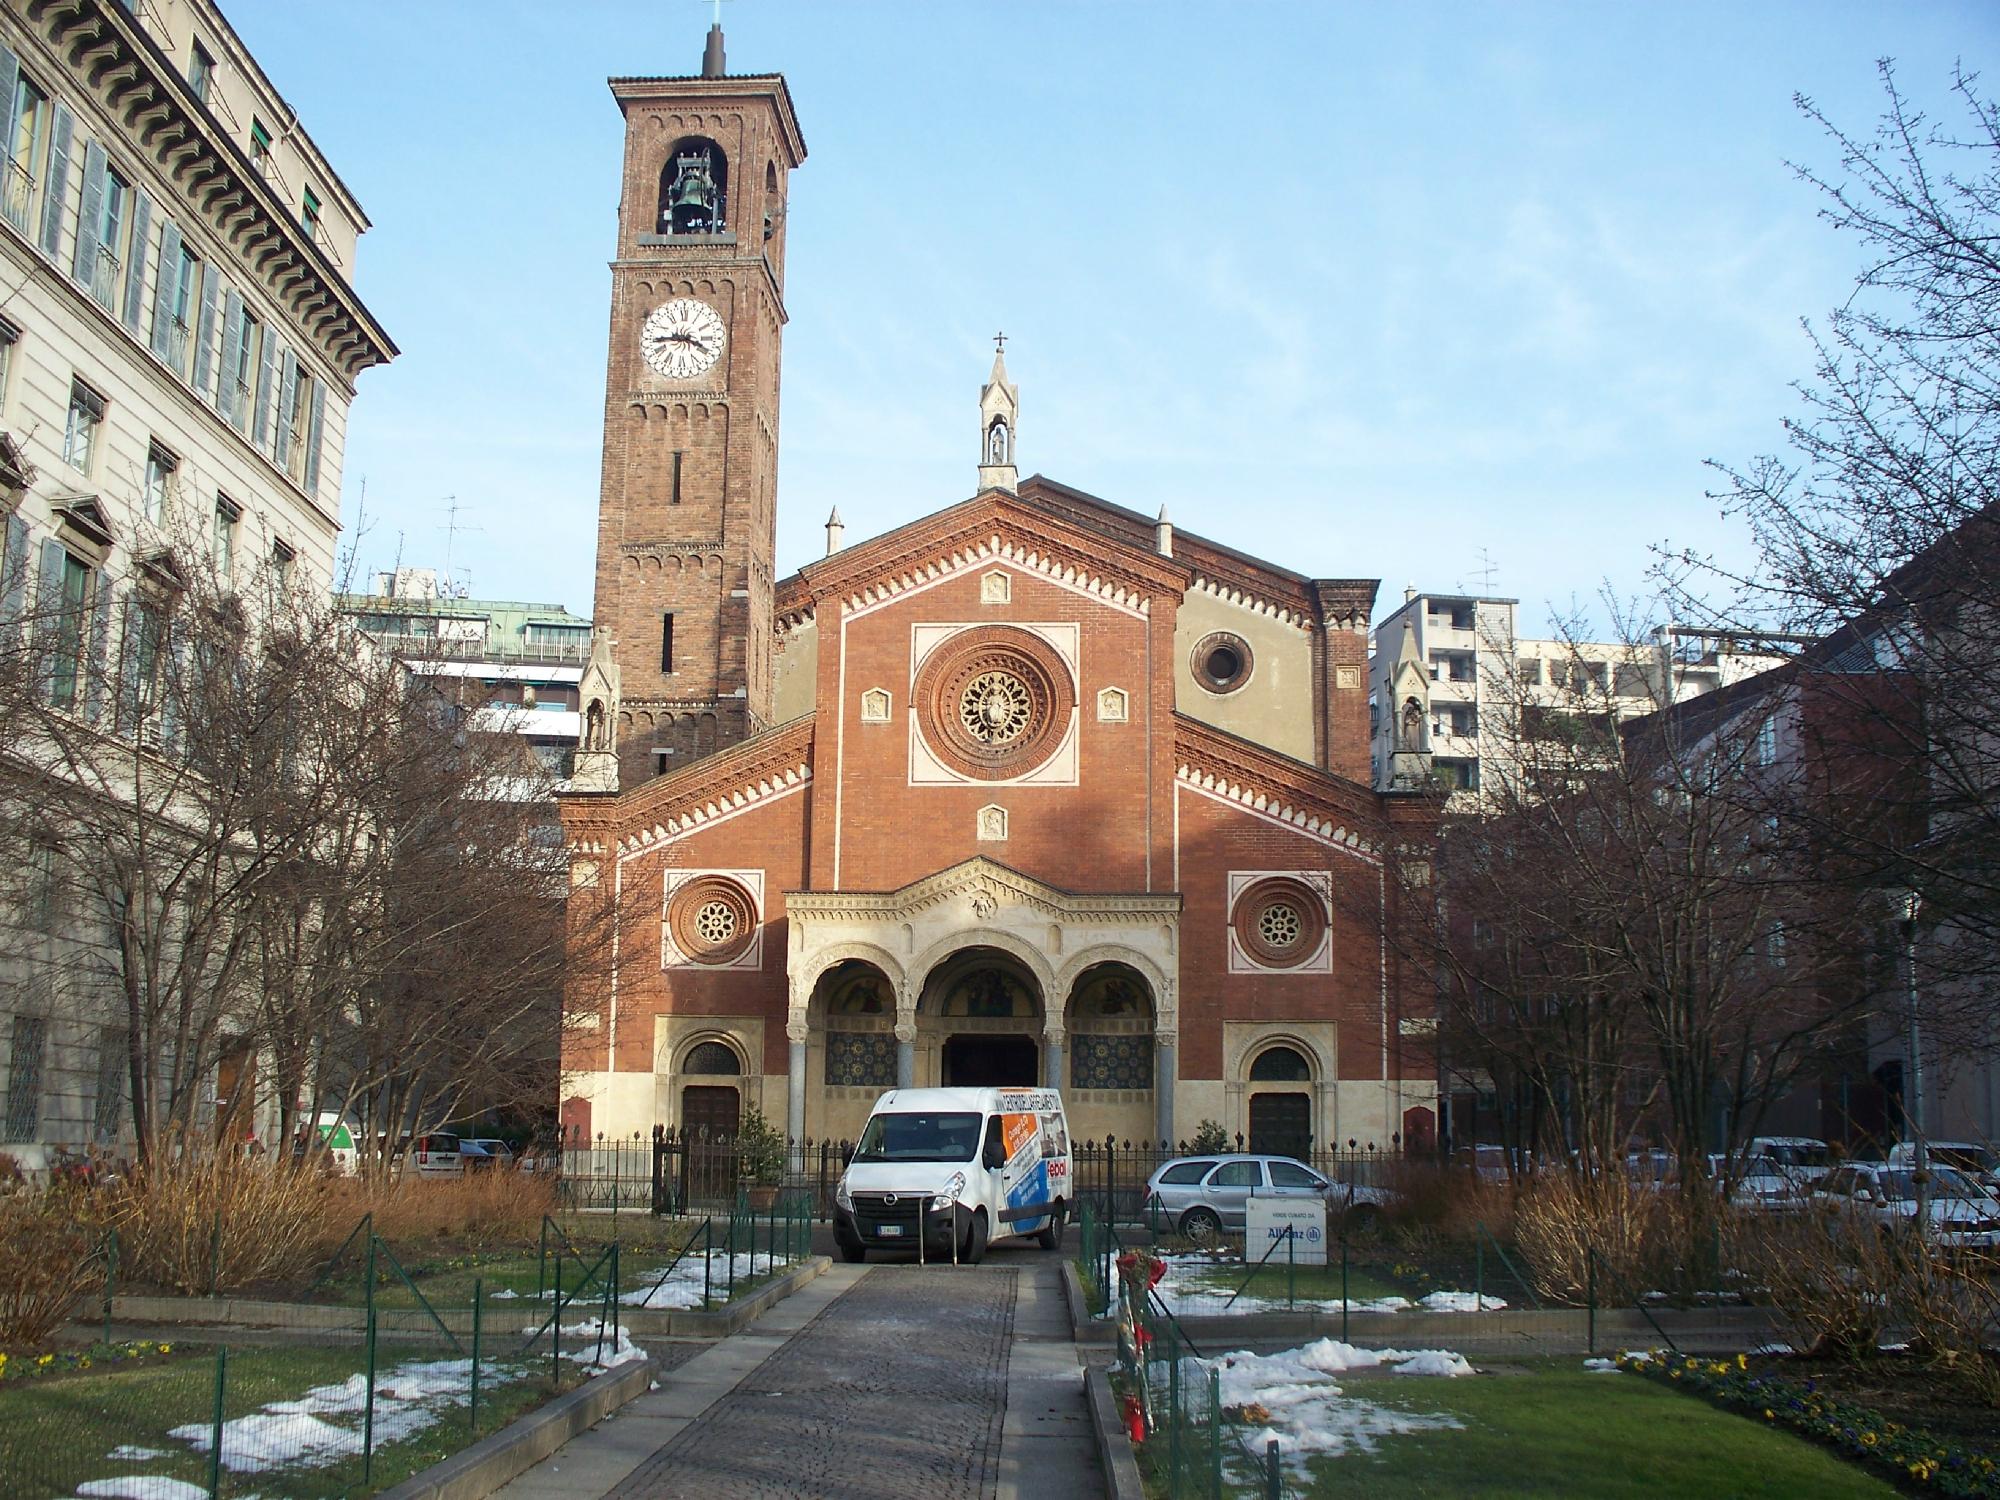 Chiesa di Sant'Eufemia